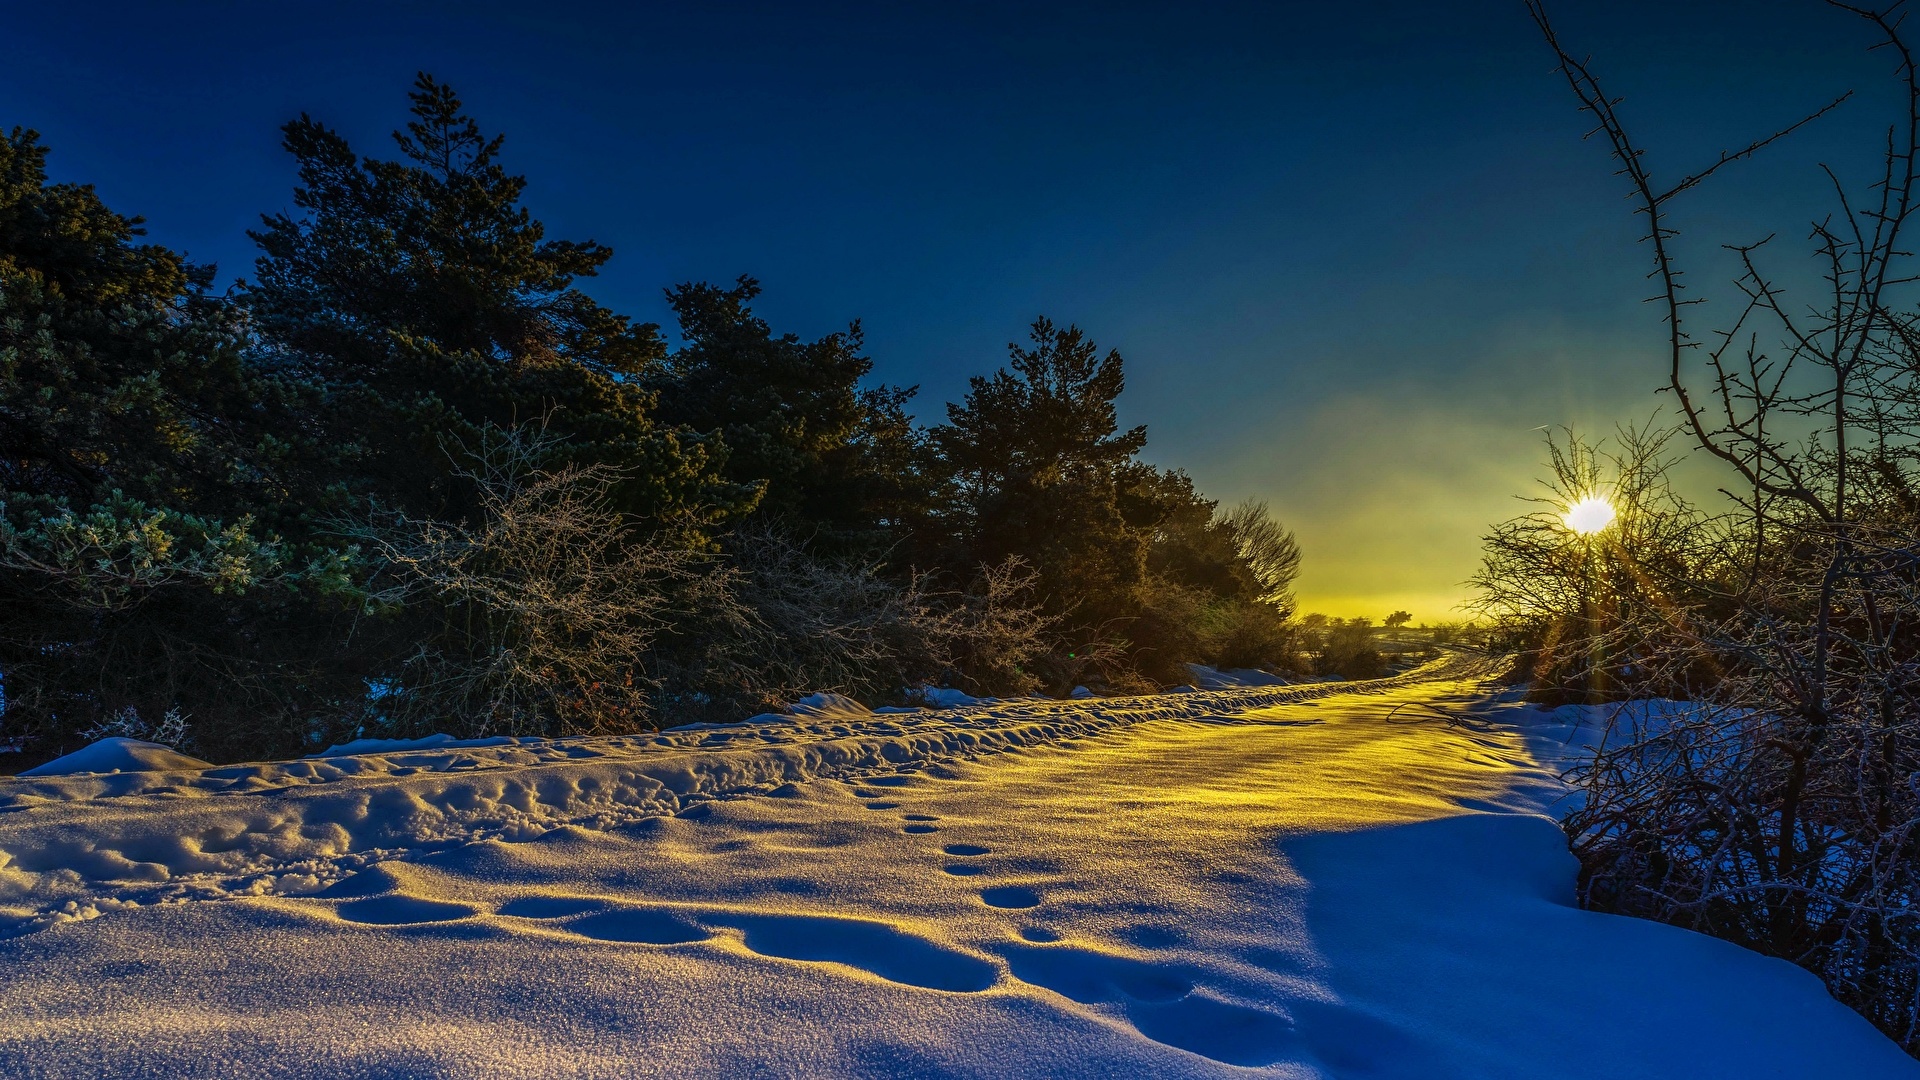 Winter Sunset Image